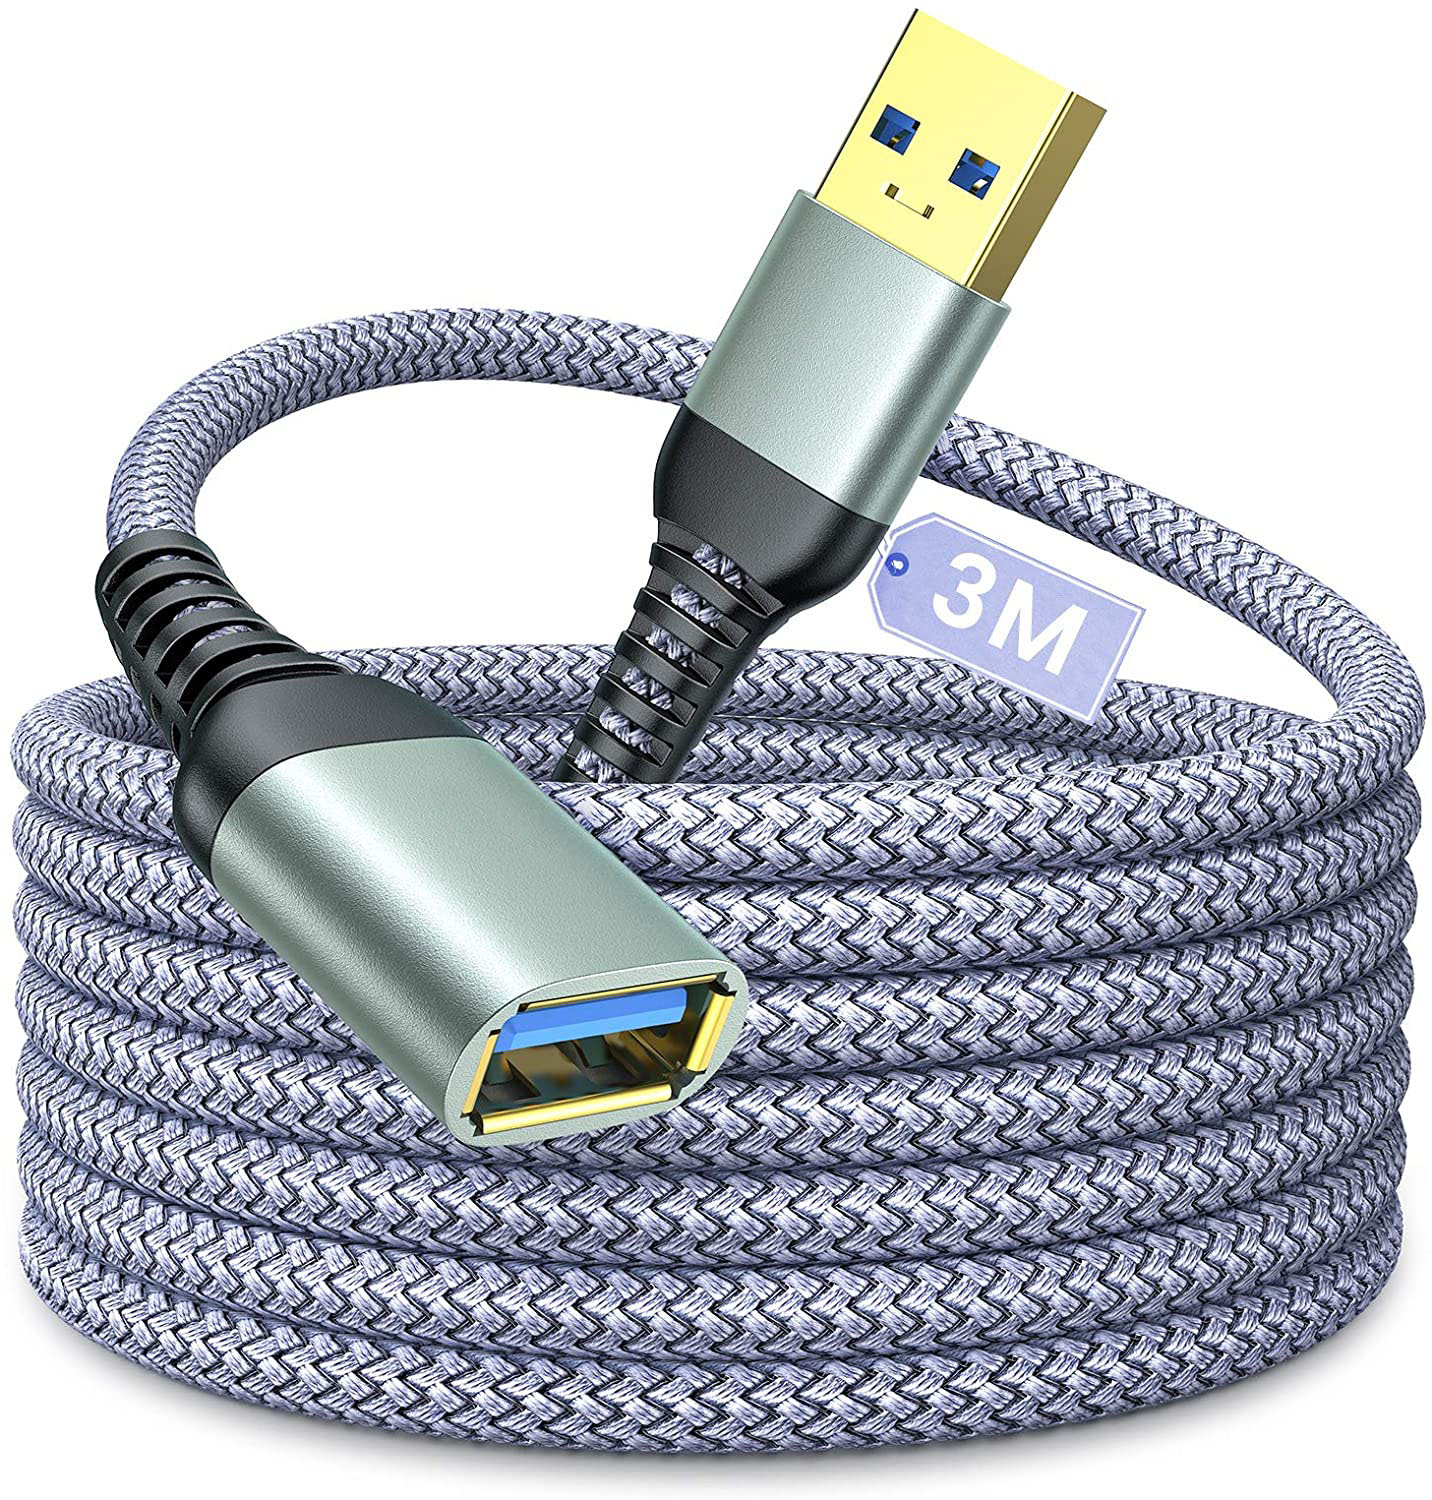 pro snake USB 2.0 Verlängerungskabel 3m